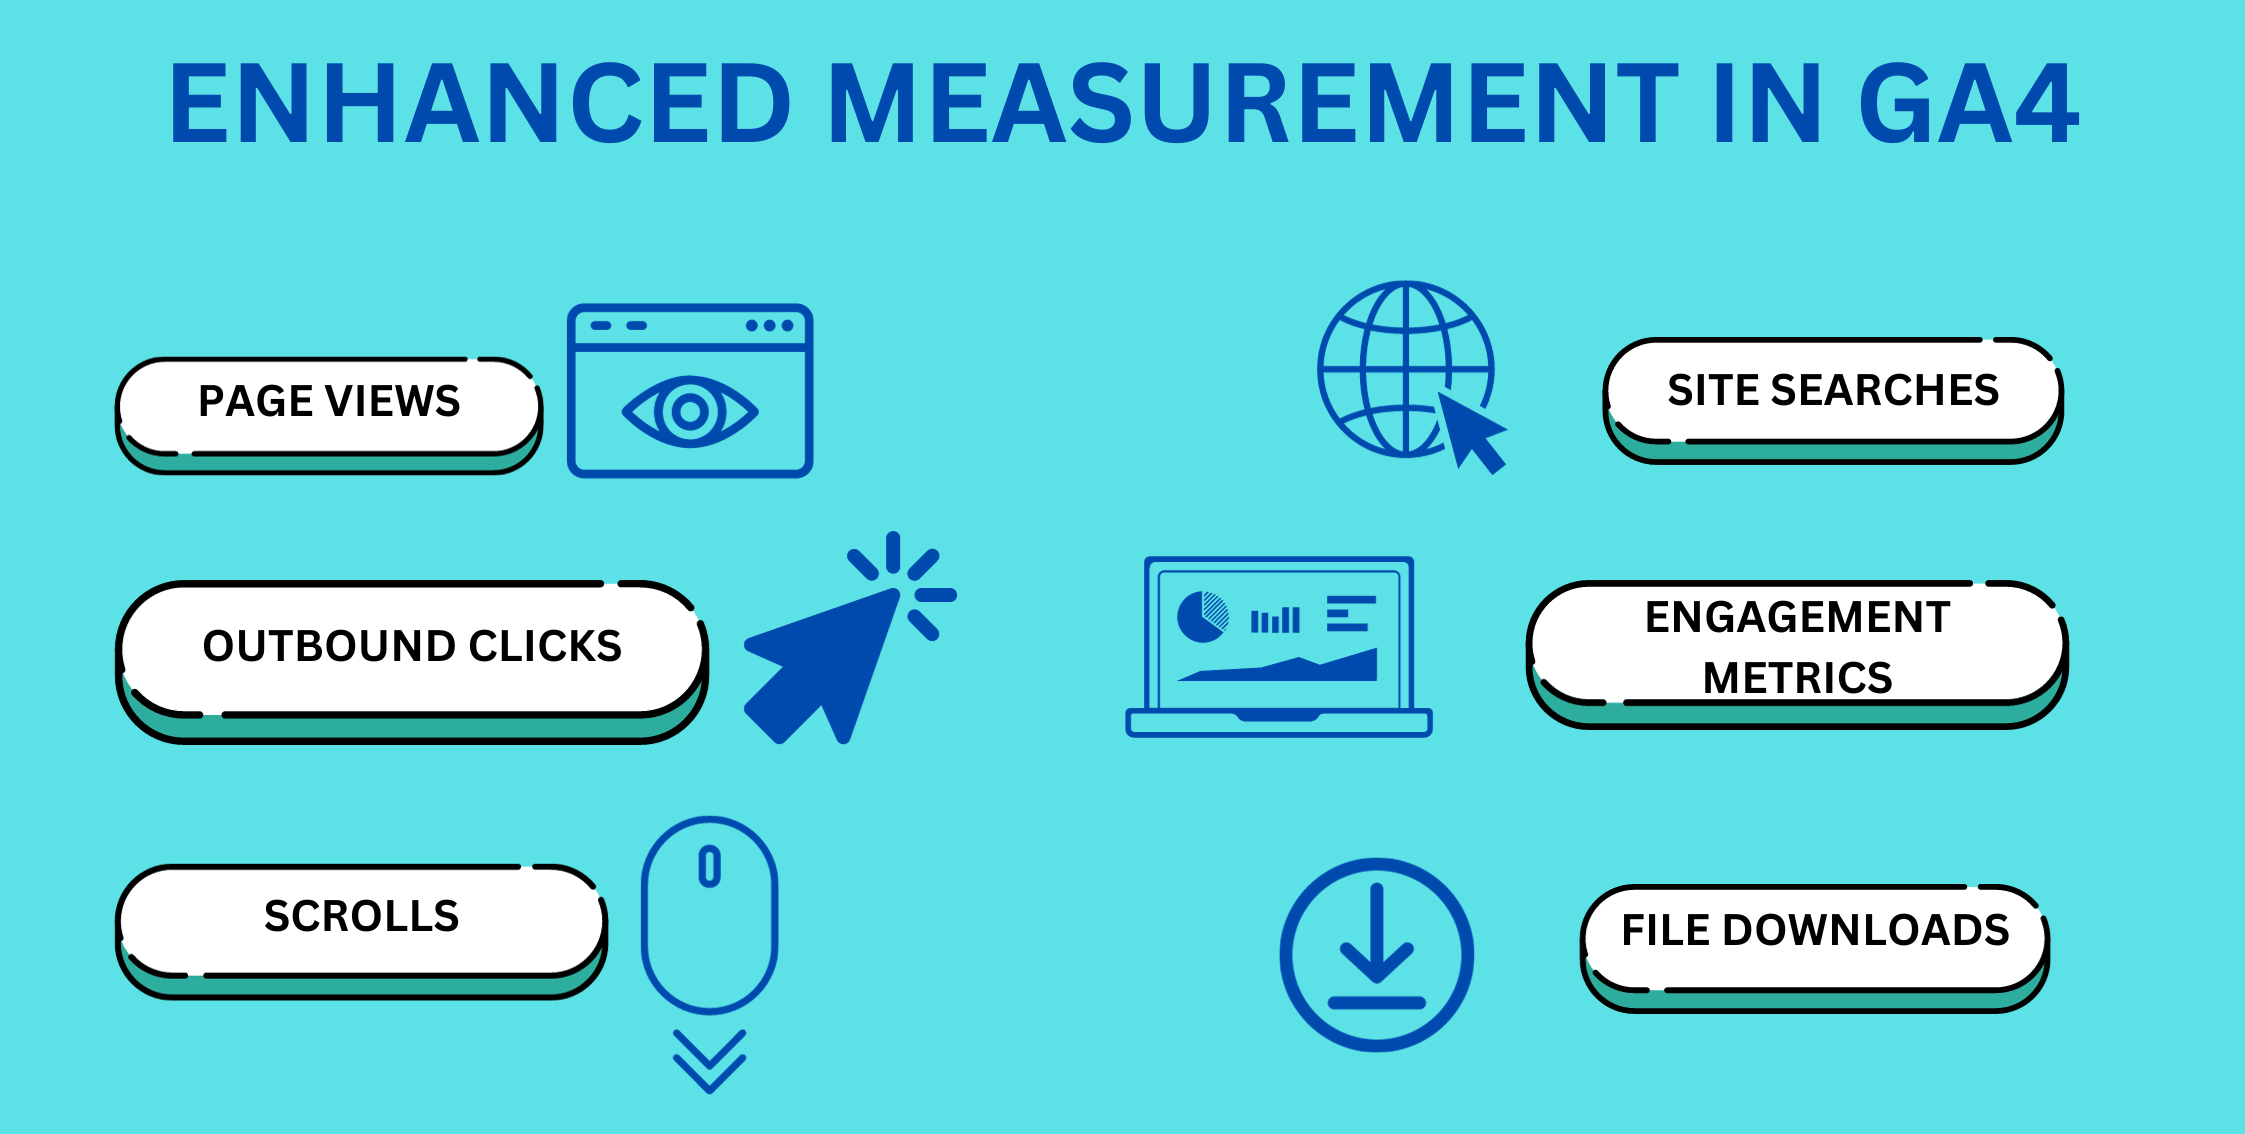 What is Enhanced Measurement in GA4?